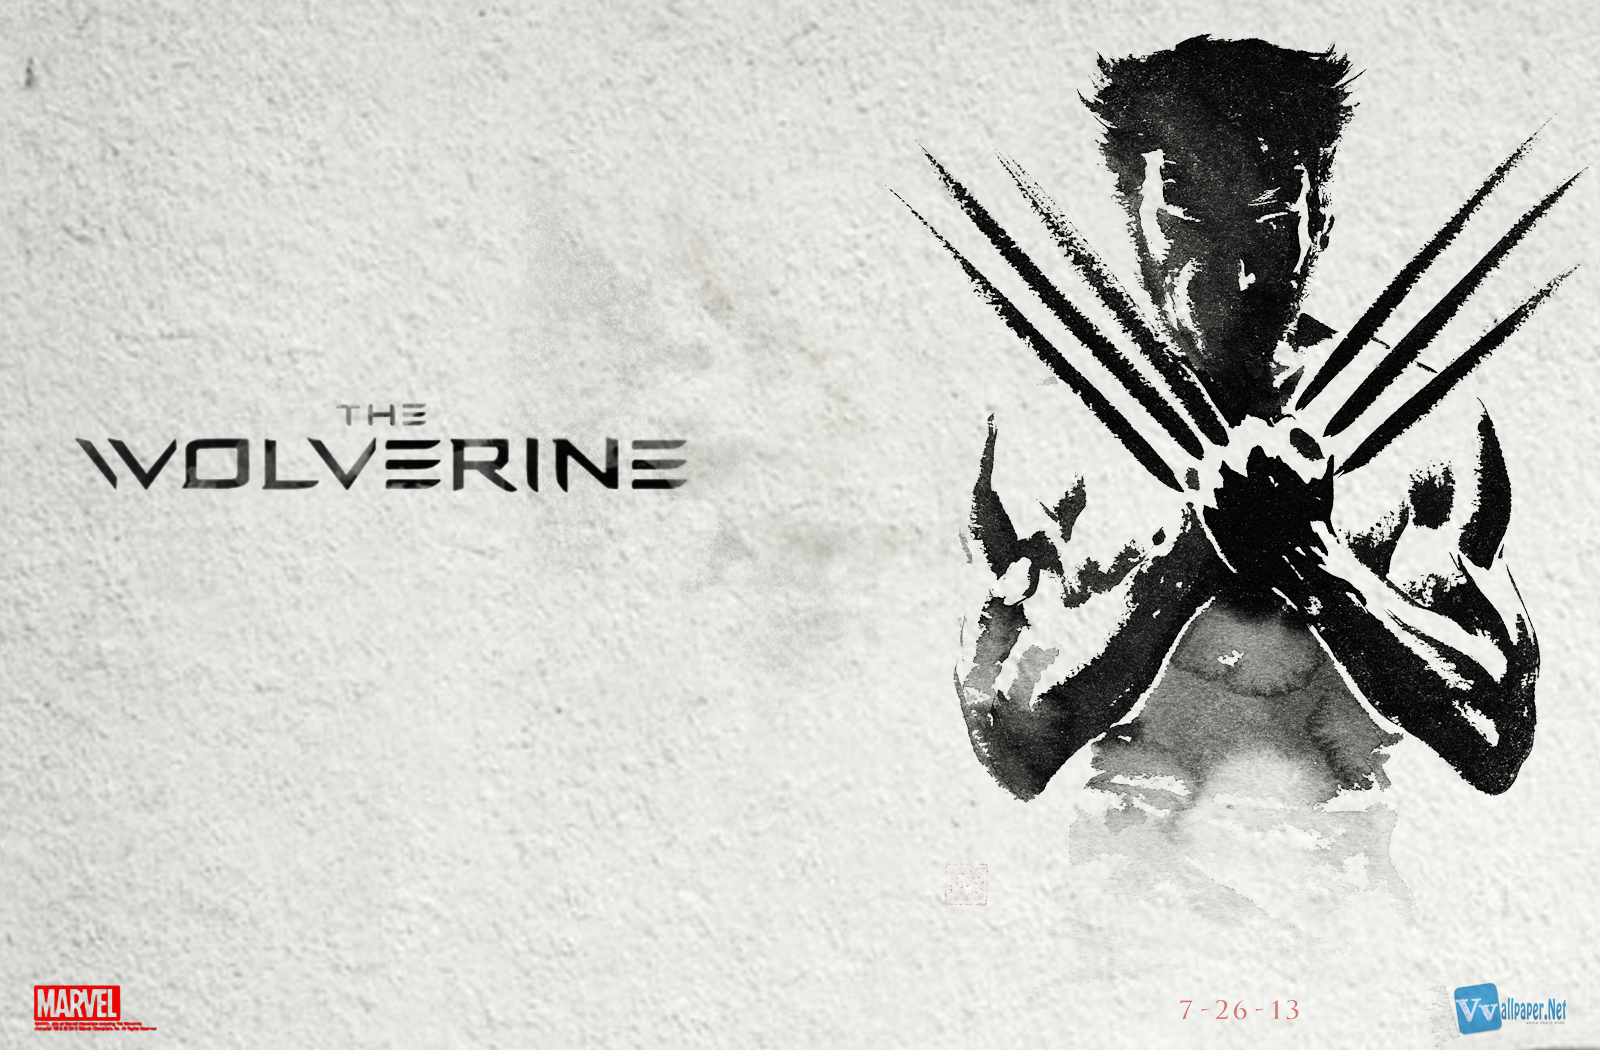 Movie Review: The Wolverine is sharper than Origins